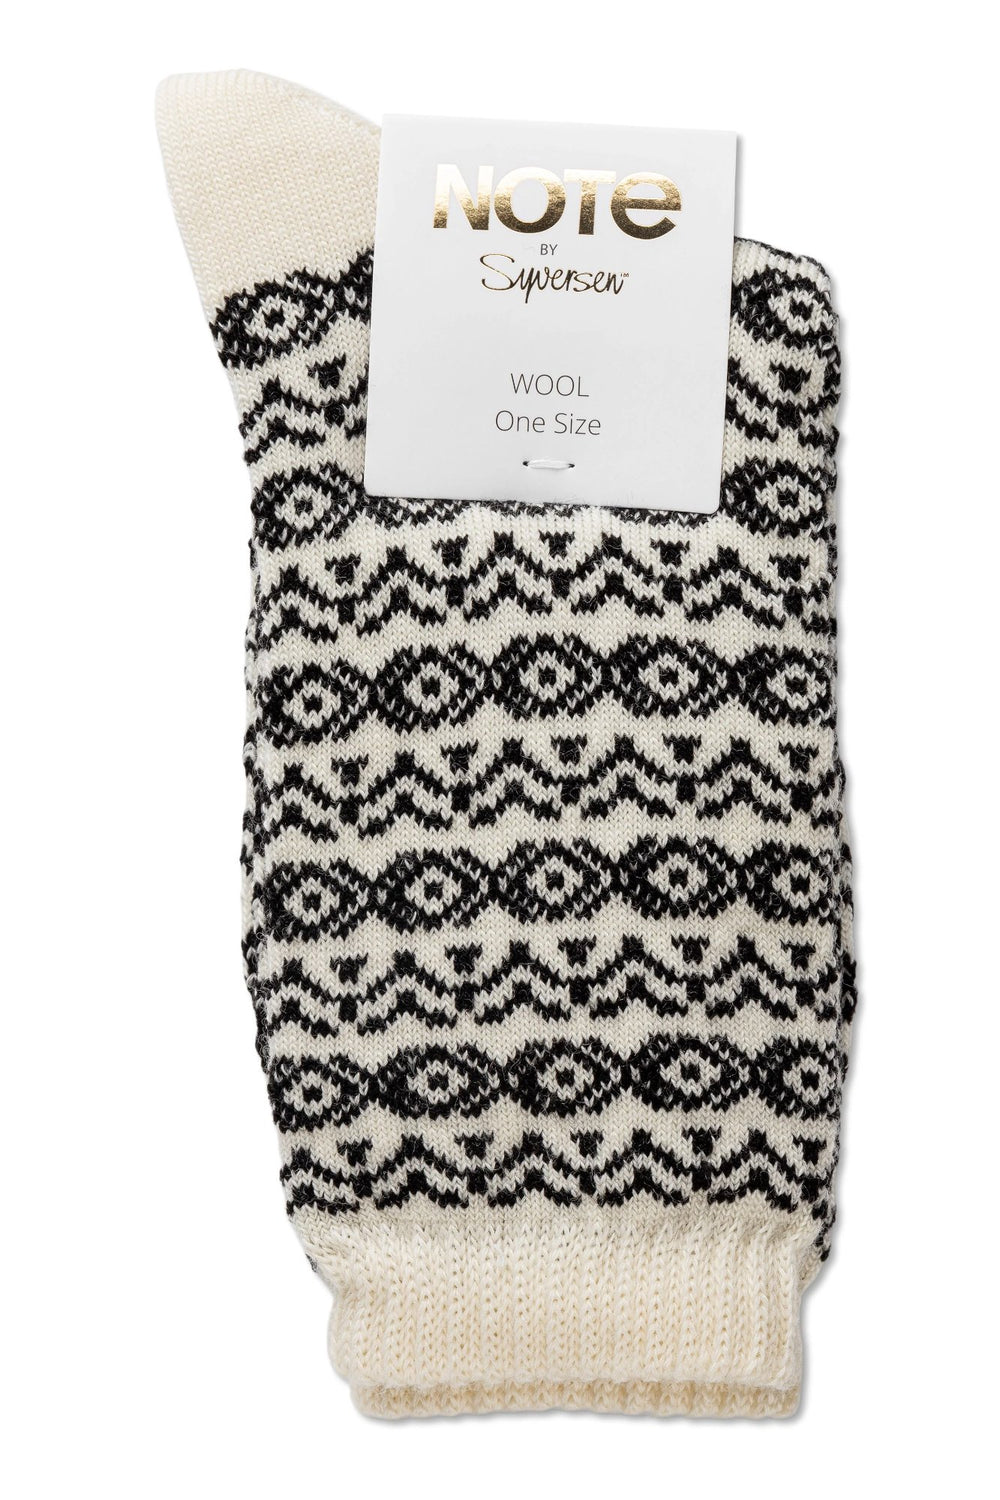 Note by Syversen | Strømper | Wool pattern, offwhite/ black